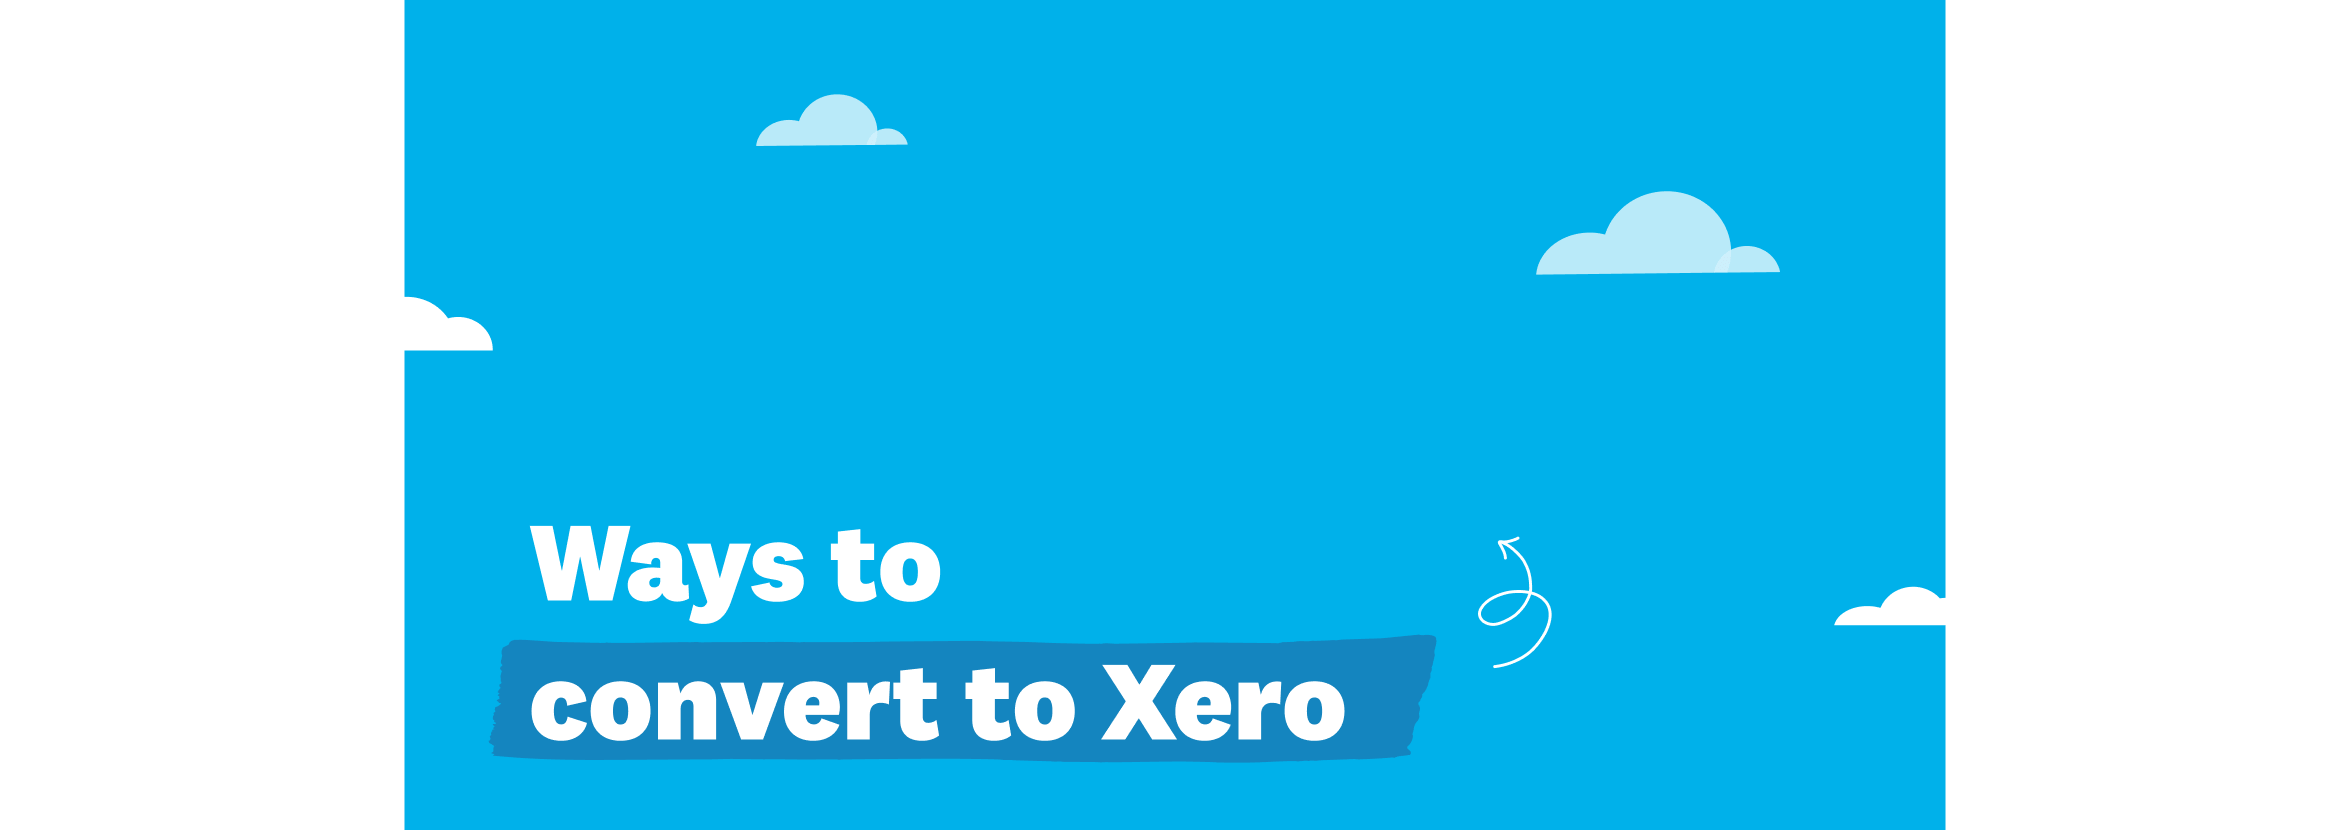 Ways to convert to Xero